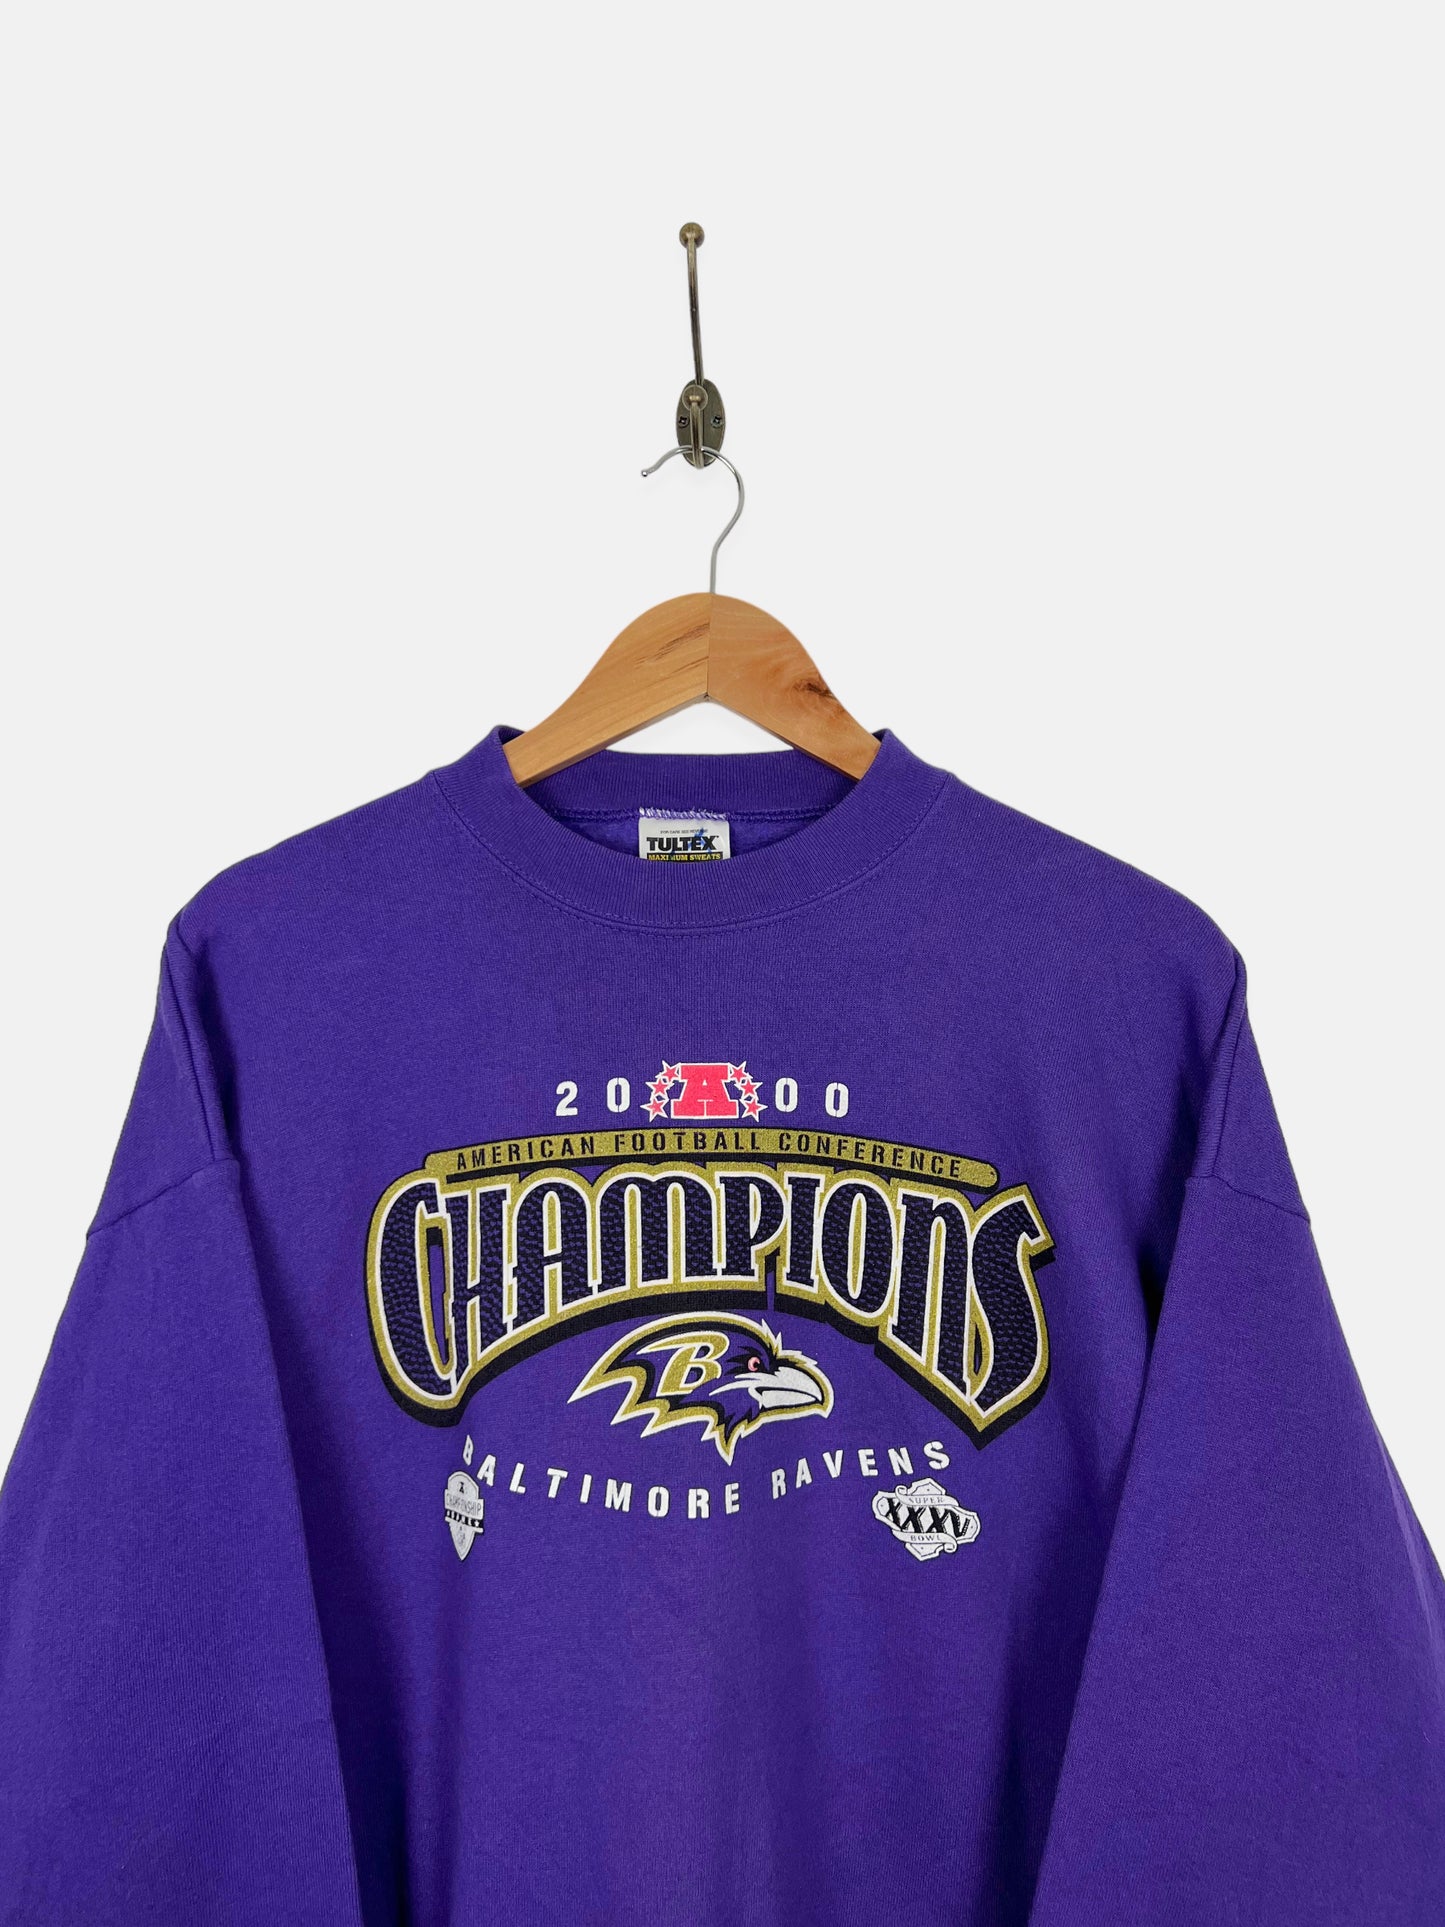 Baltimore Ravens NFL Vintage Sweatshirt Size L